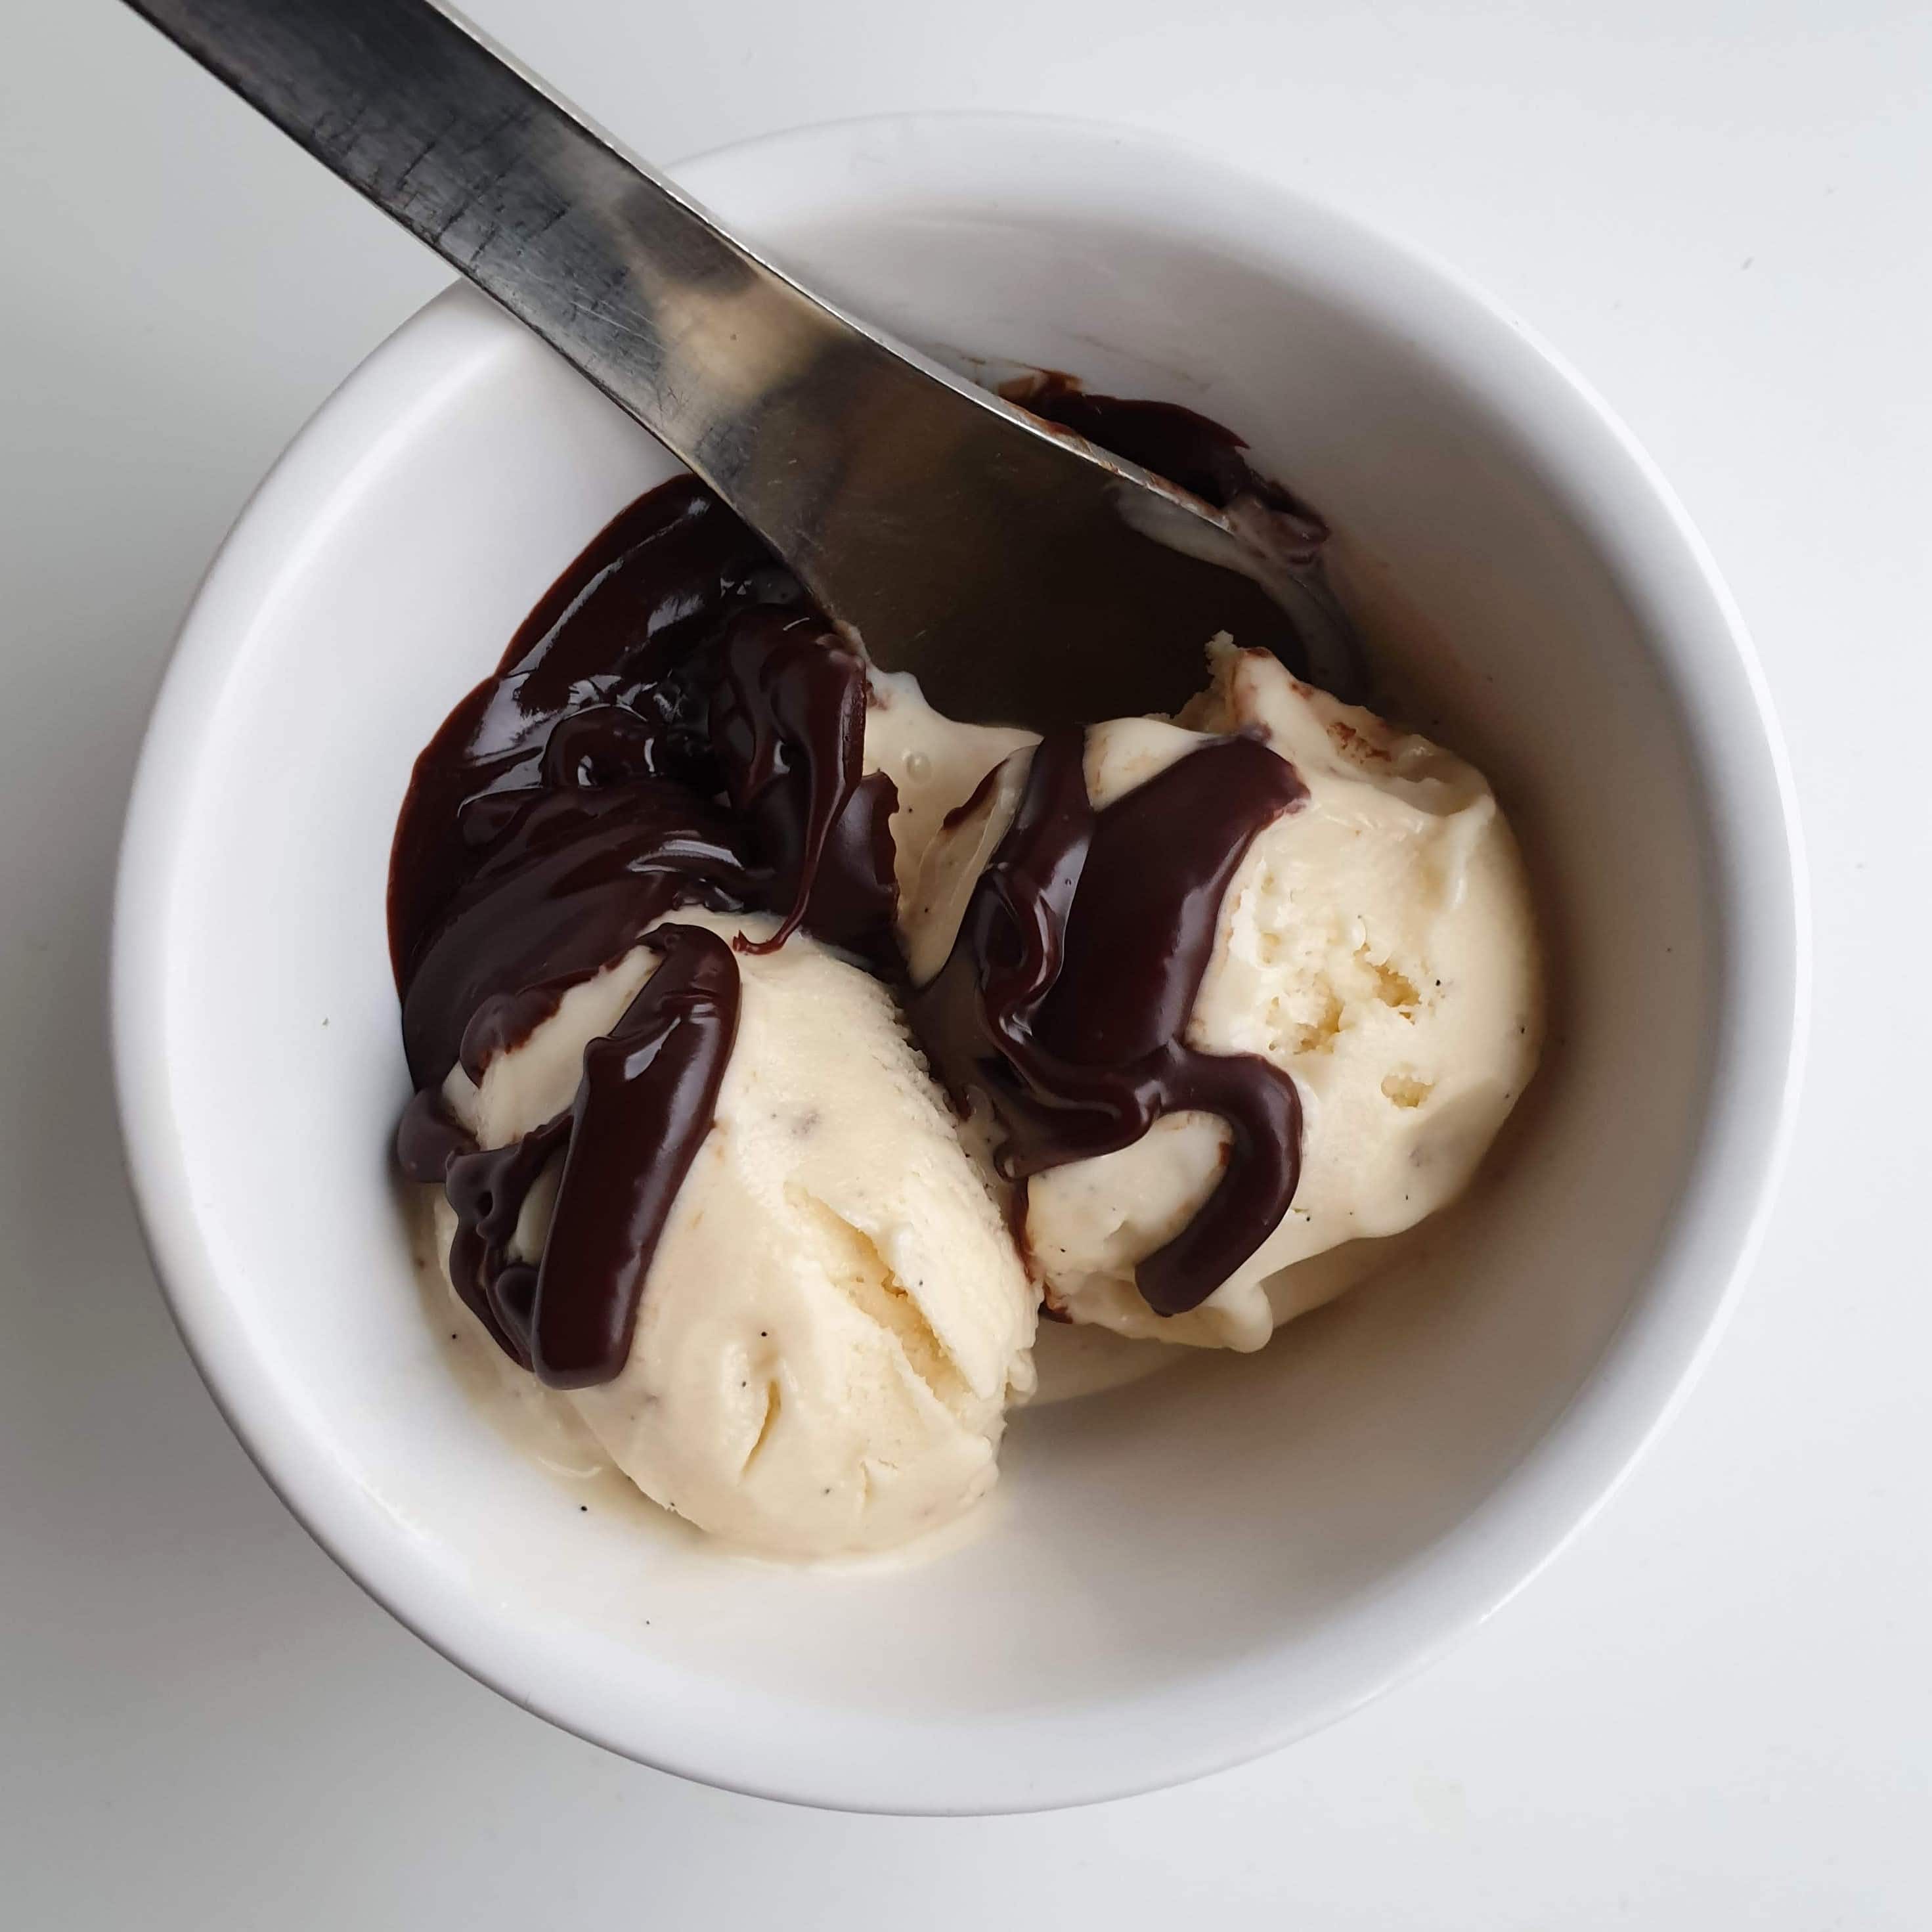 En klassisk dansk dessert - vaniljeis med chokolade ganache. Find opskrifter, gratis download, print og inspiration til årets gang på danishthings.com